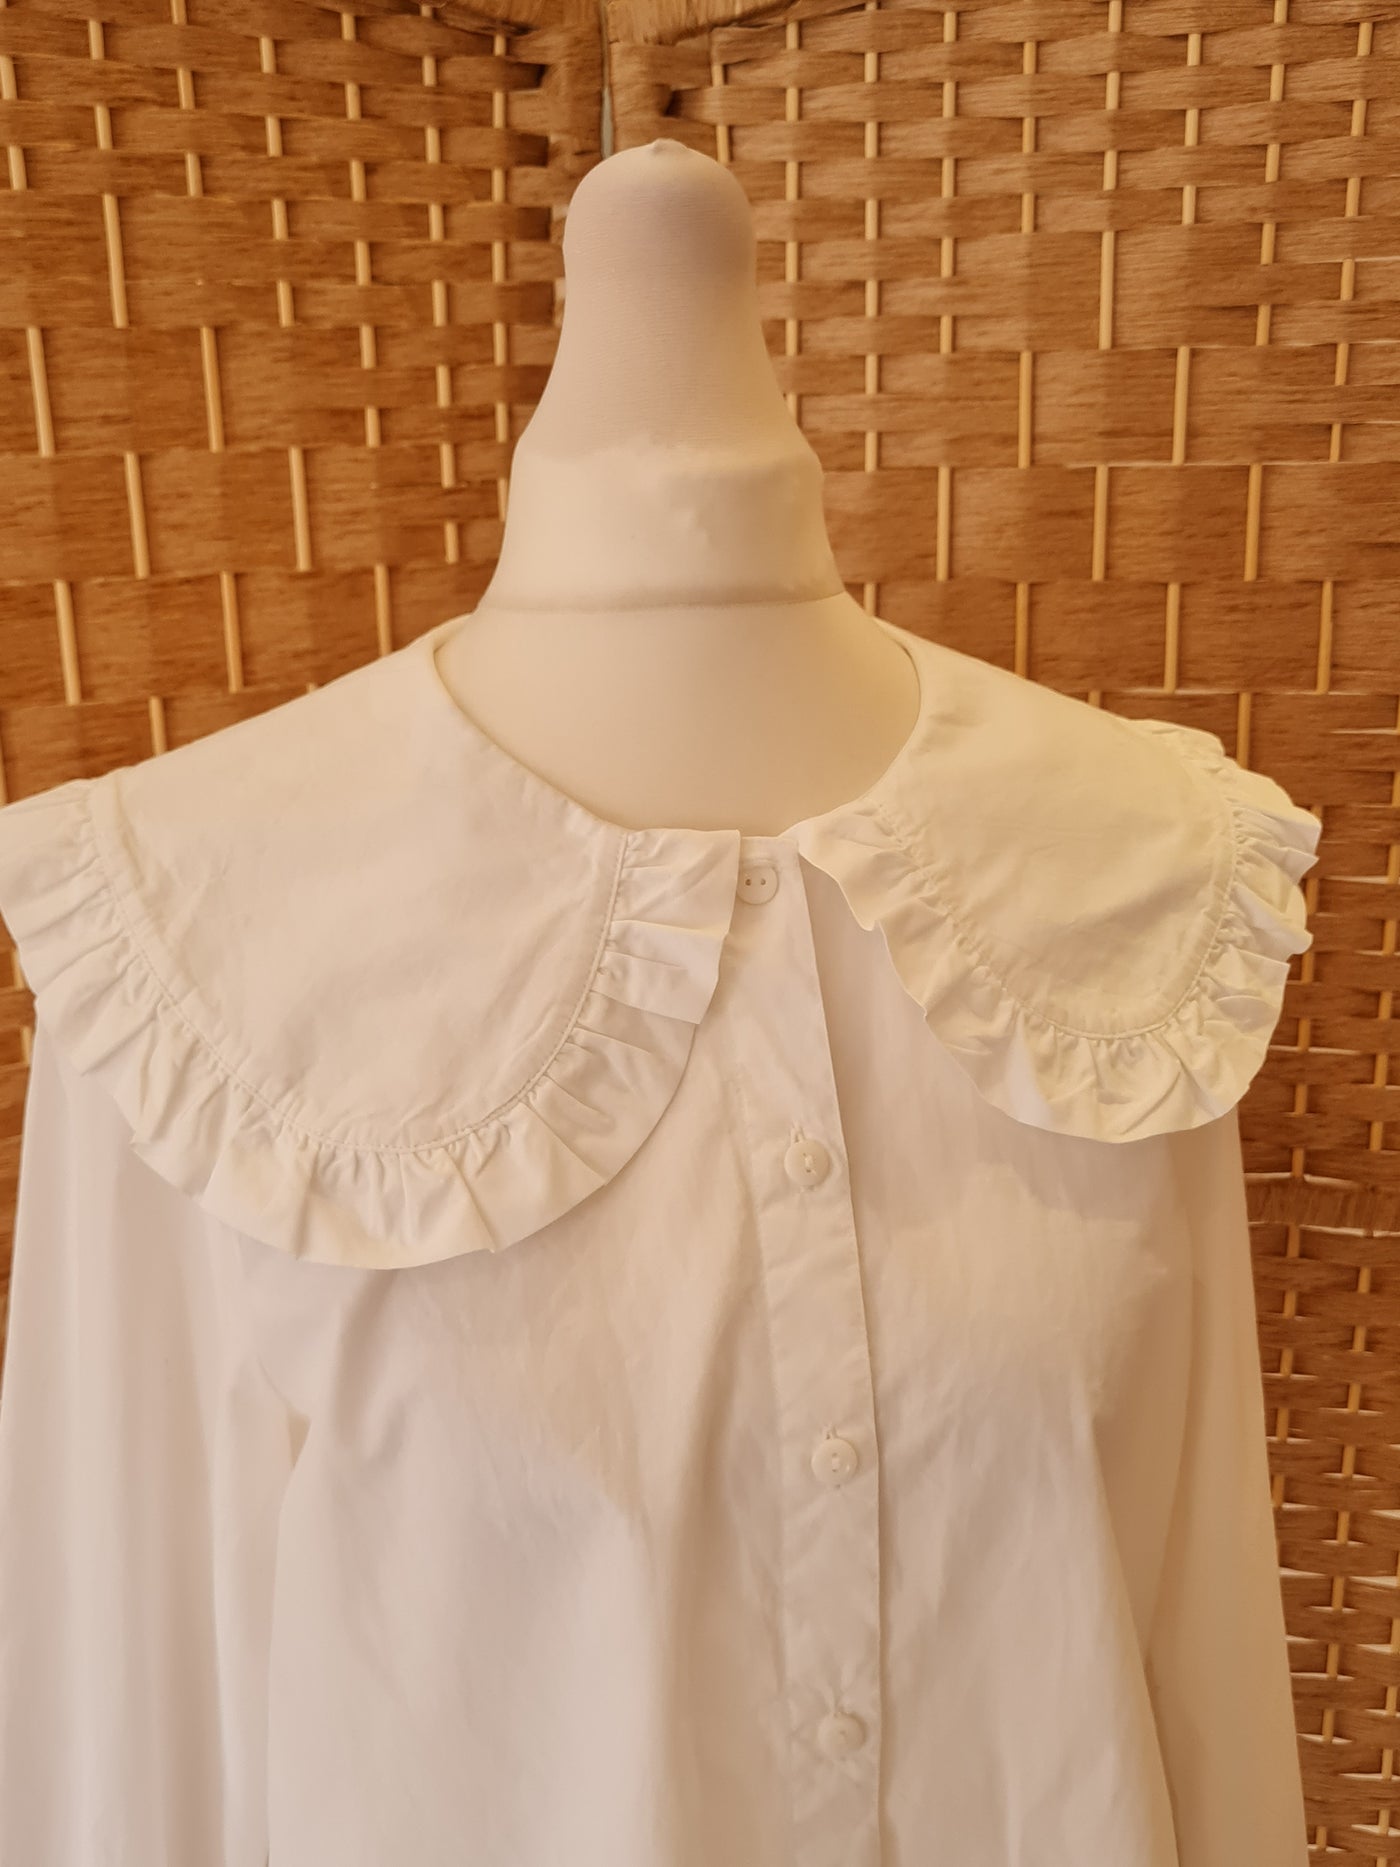 Monki white shirt XS New